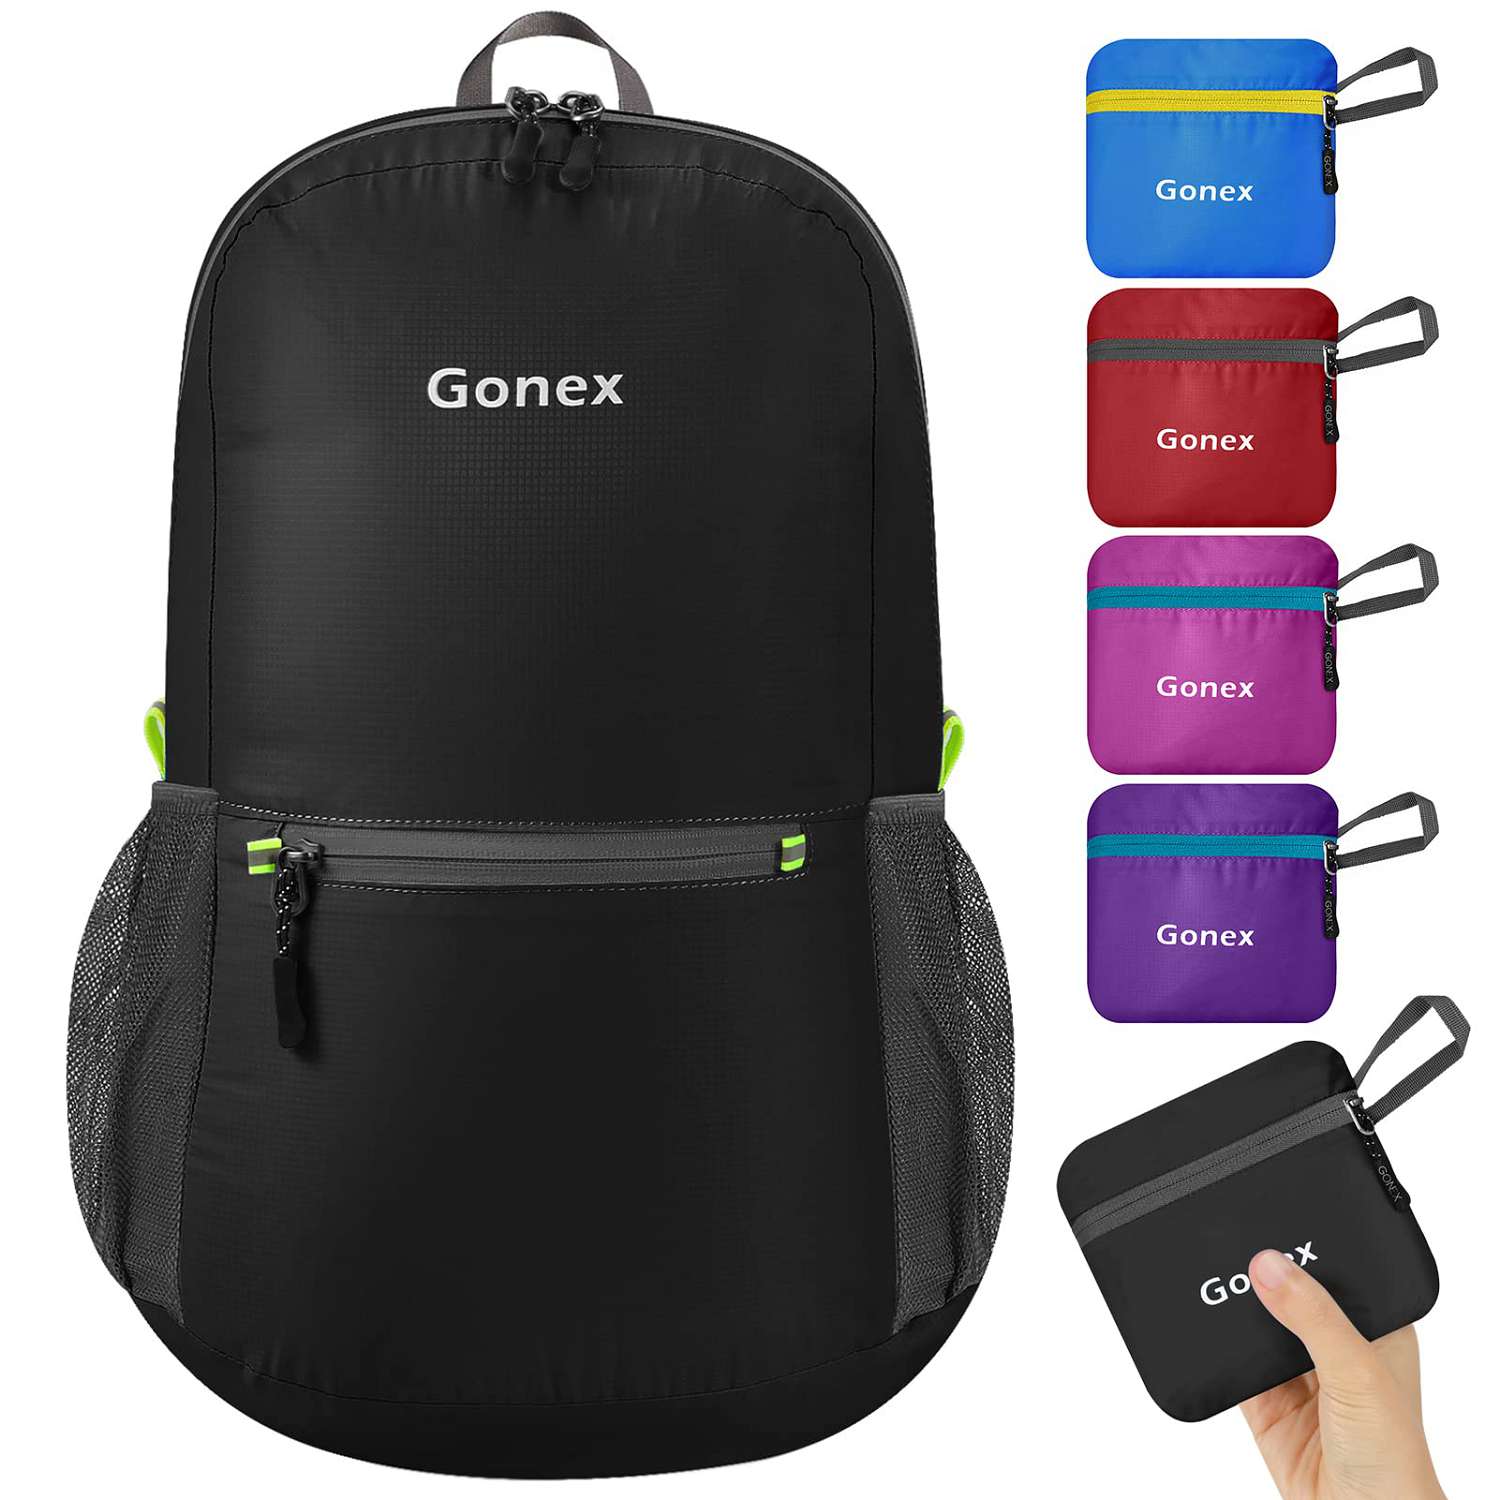 Gonex 20L Lightweight Packable Hiking Backpack Handy Daypack